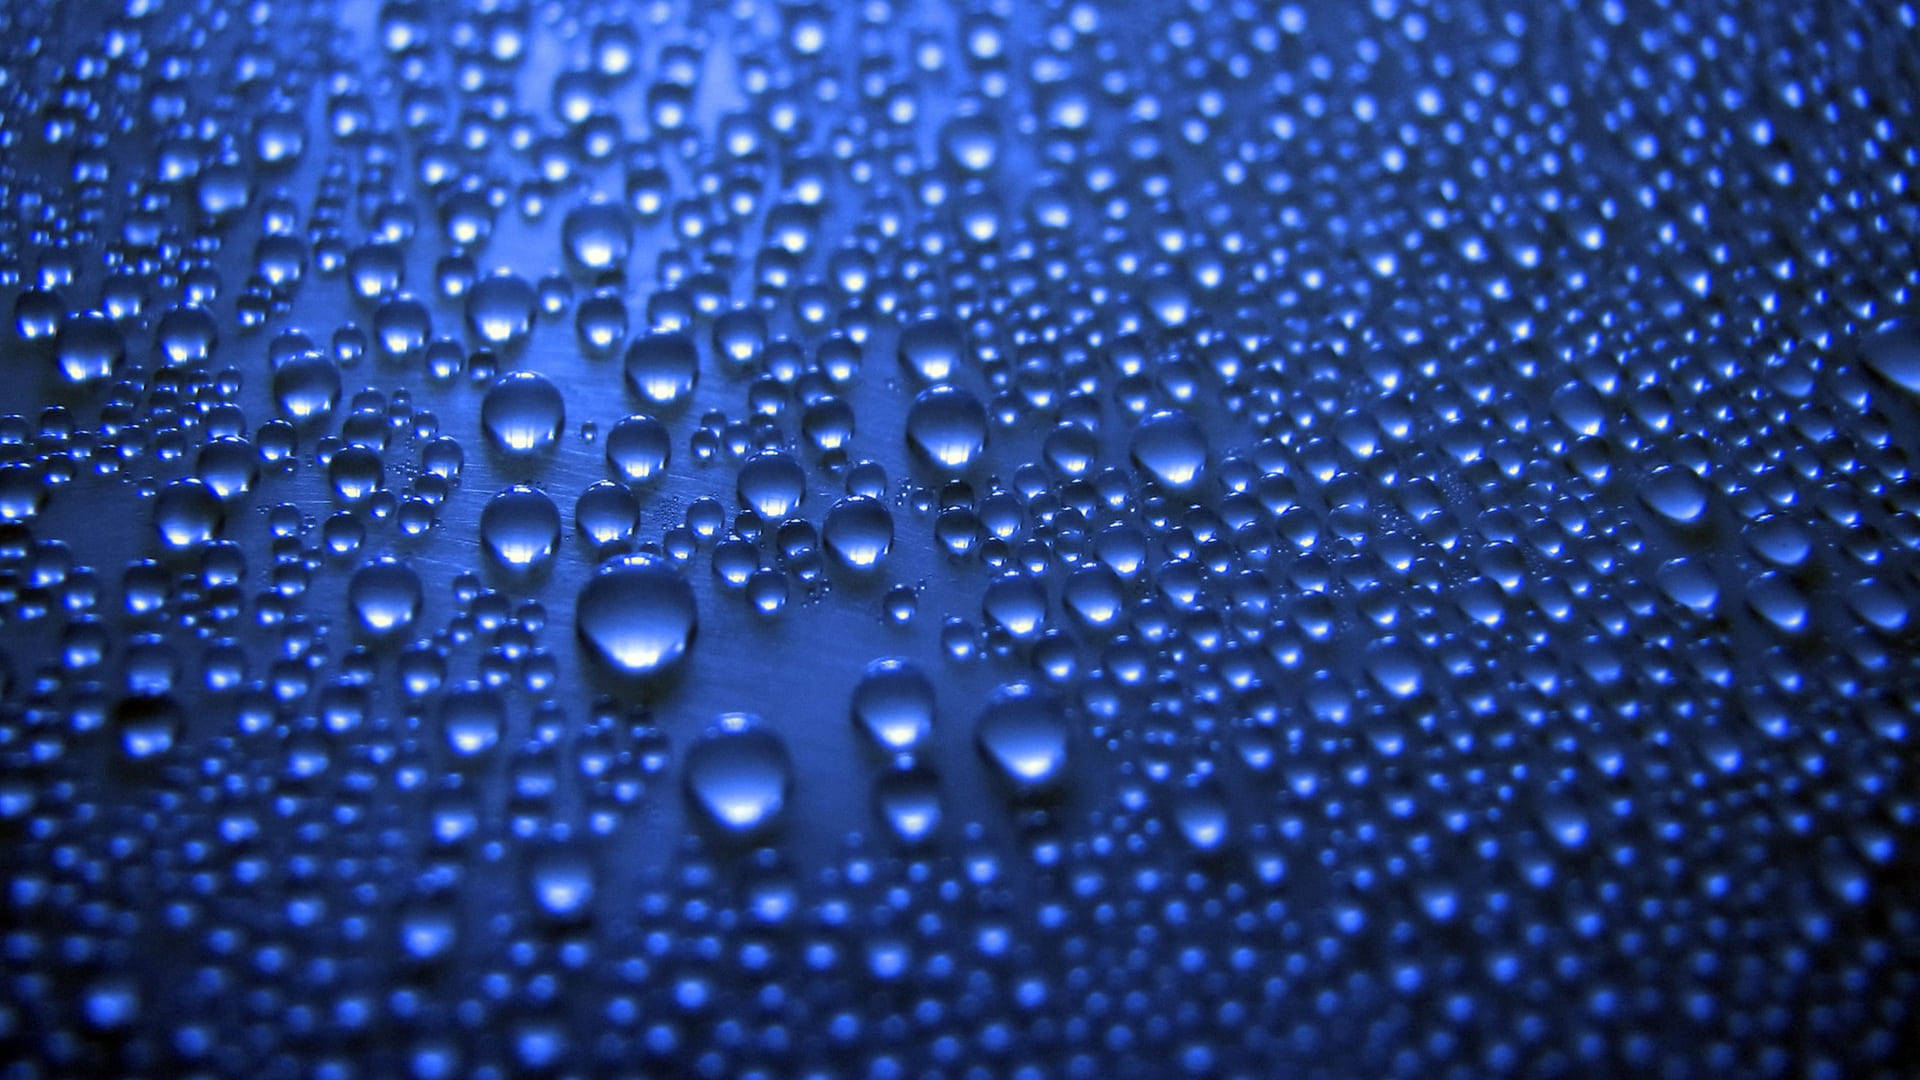 Neon Blue Aesthetic Water Droplets Wallpaper